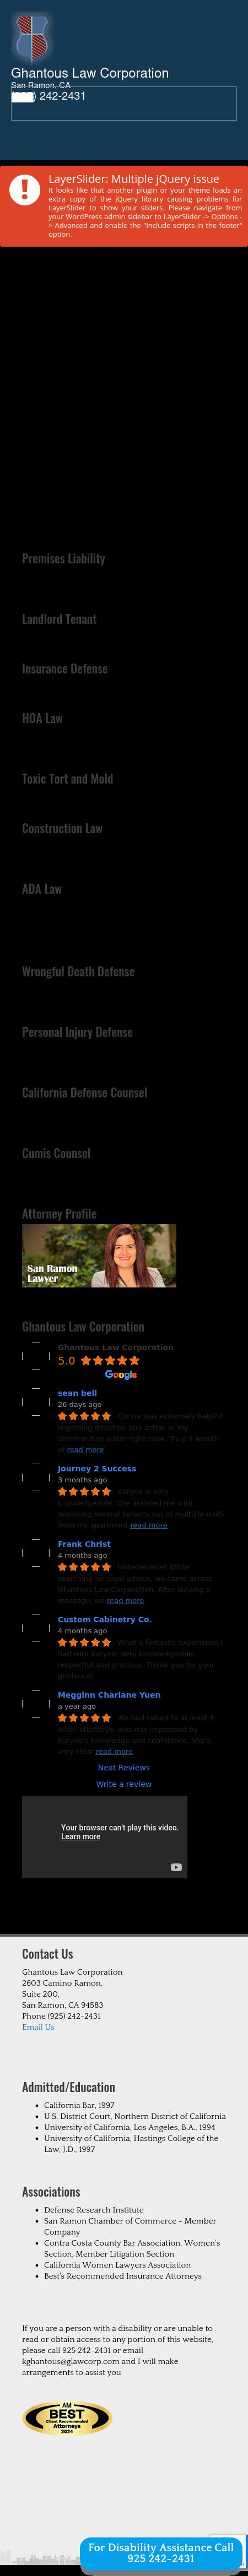 Ghantous Law Corporation - San Ramon CA Lawyers